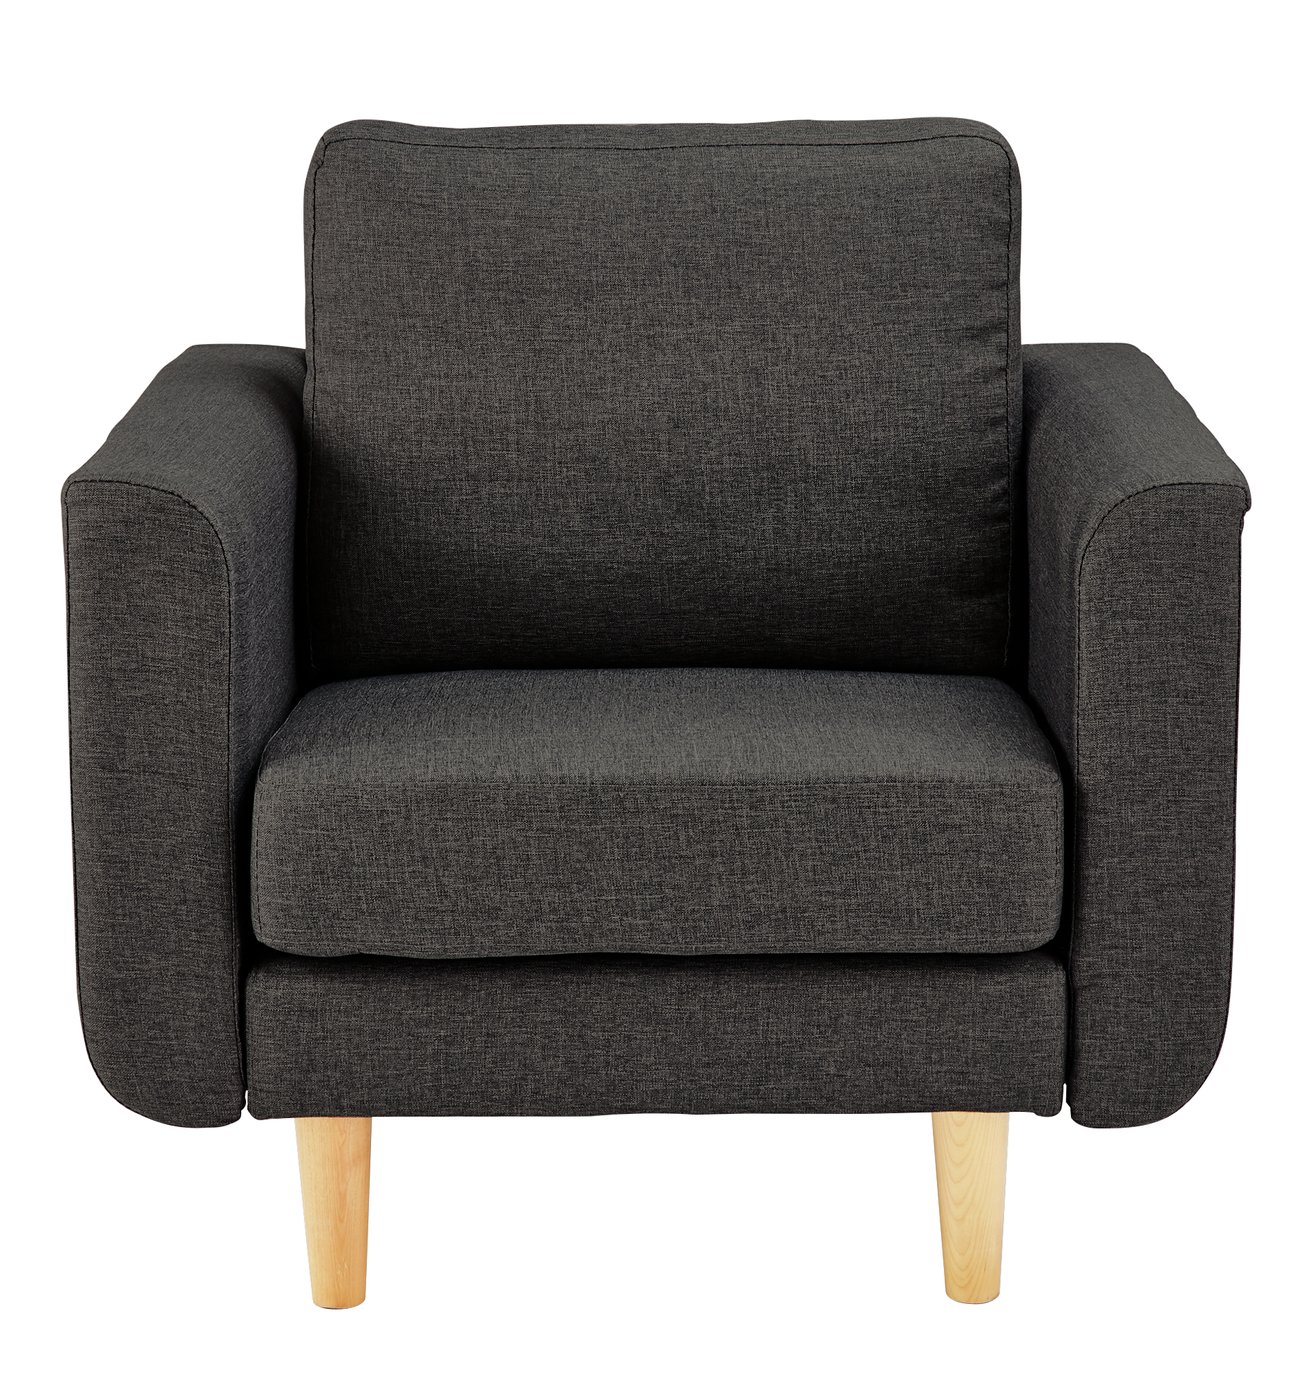 Argos Home Remi Fabric Chair in a Box Reviews